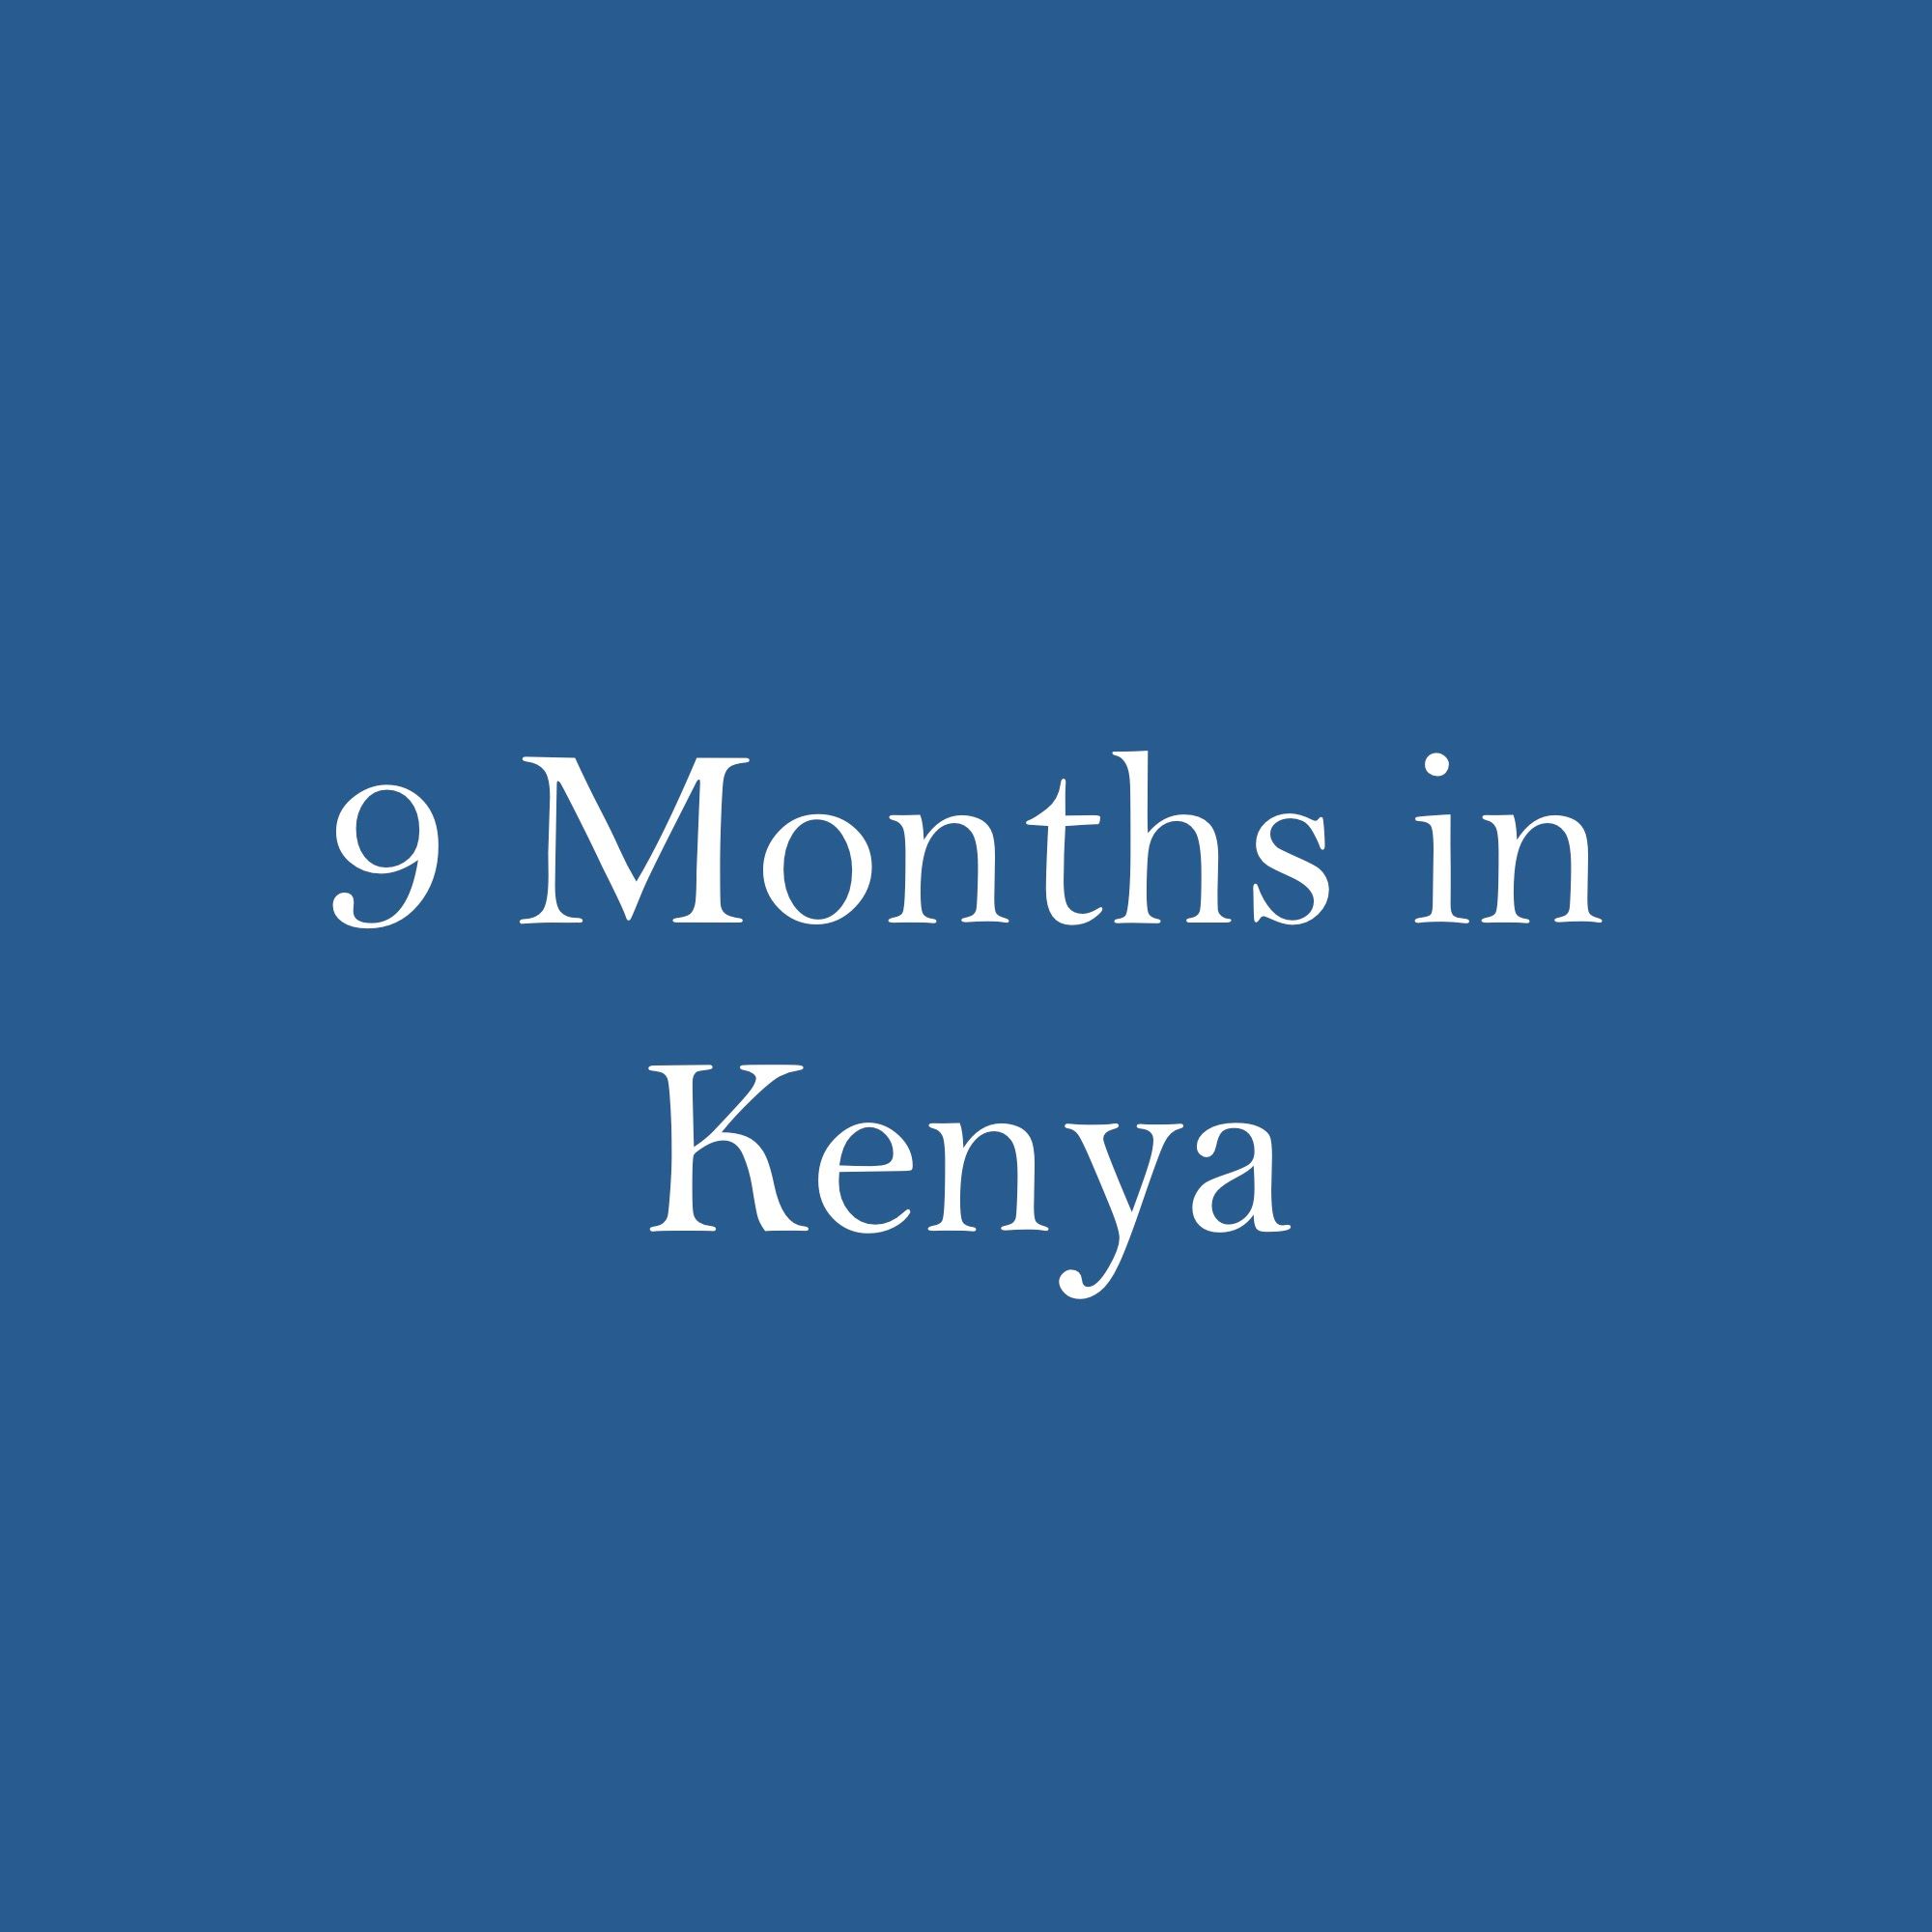 9 Months in Kenya